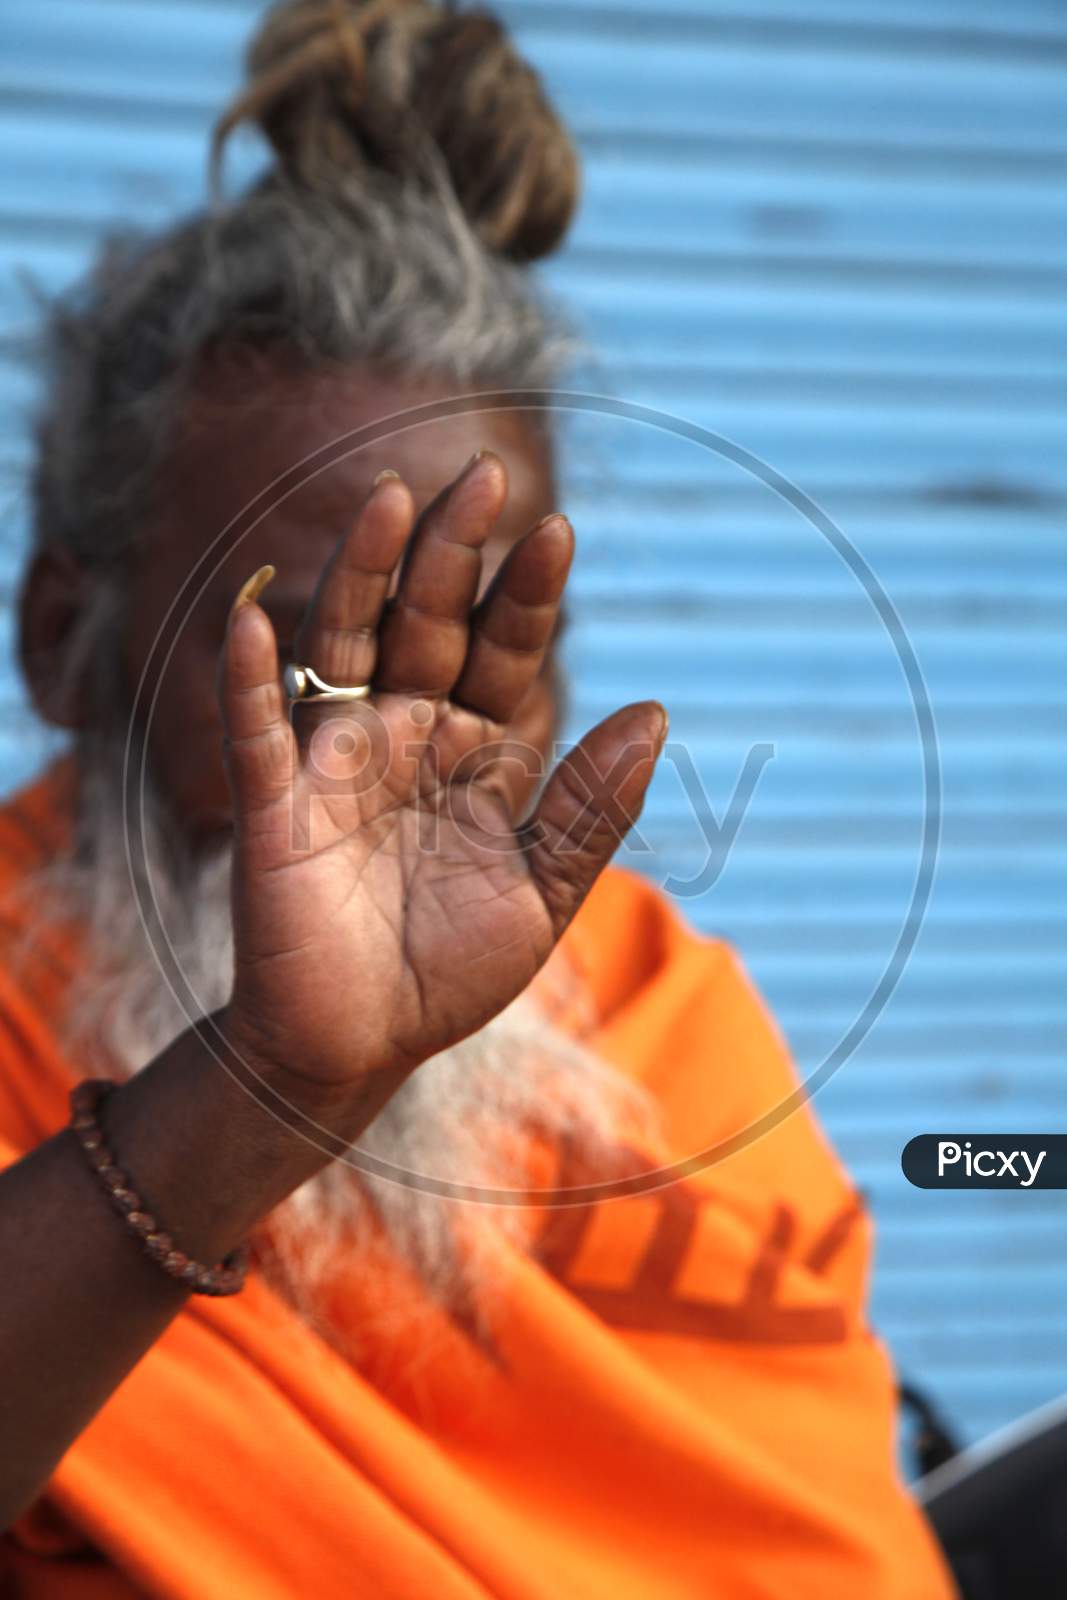 Selective Focus on Old Indian Hindu Sadhu or Baba's Palm